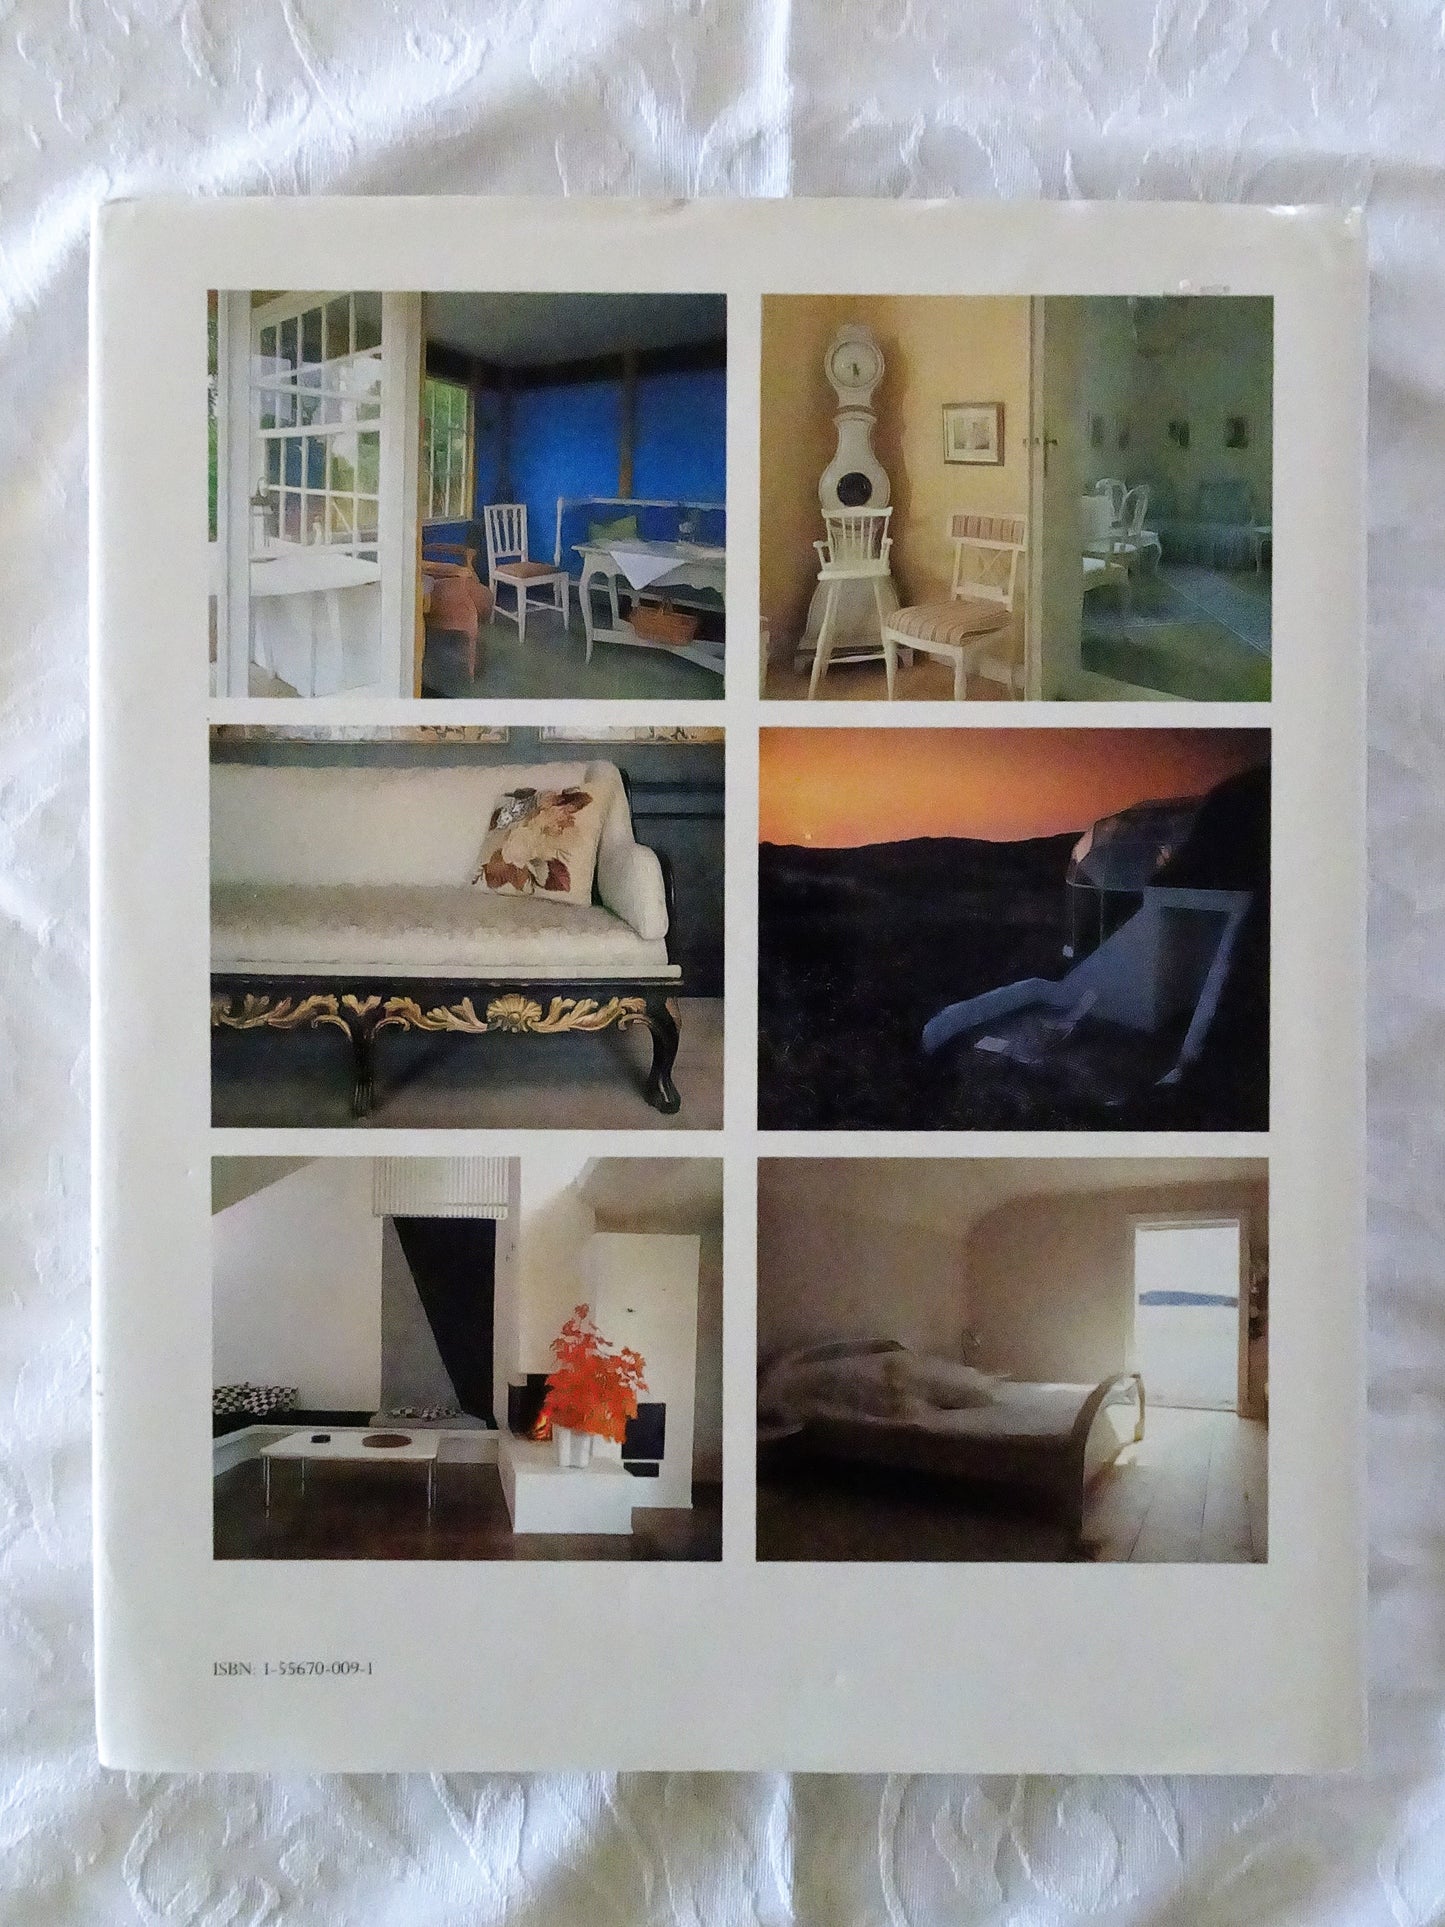 Scandinavia Living Design by Elizabeth Gaynor